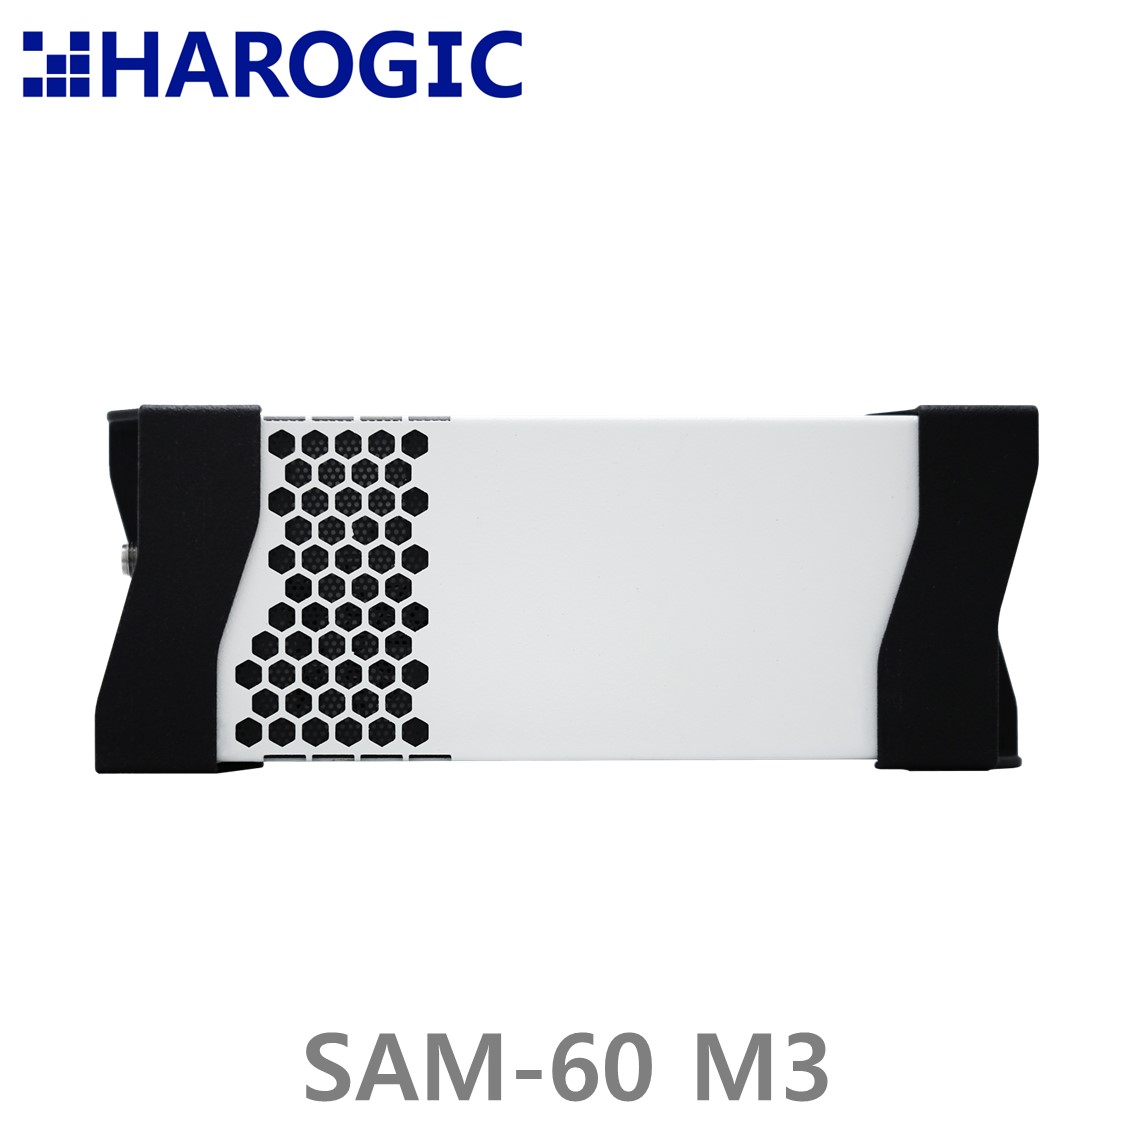 [ HAROGIC ] SAM-60 M3, USB 초소형 리얼타임 스펙트럼분석기 9 kHz - 6.3 GHz, 100MHz 대역폭, 300GHz/s sweep speed, USB3.0